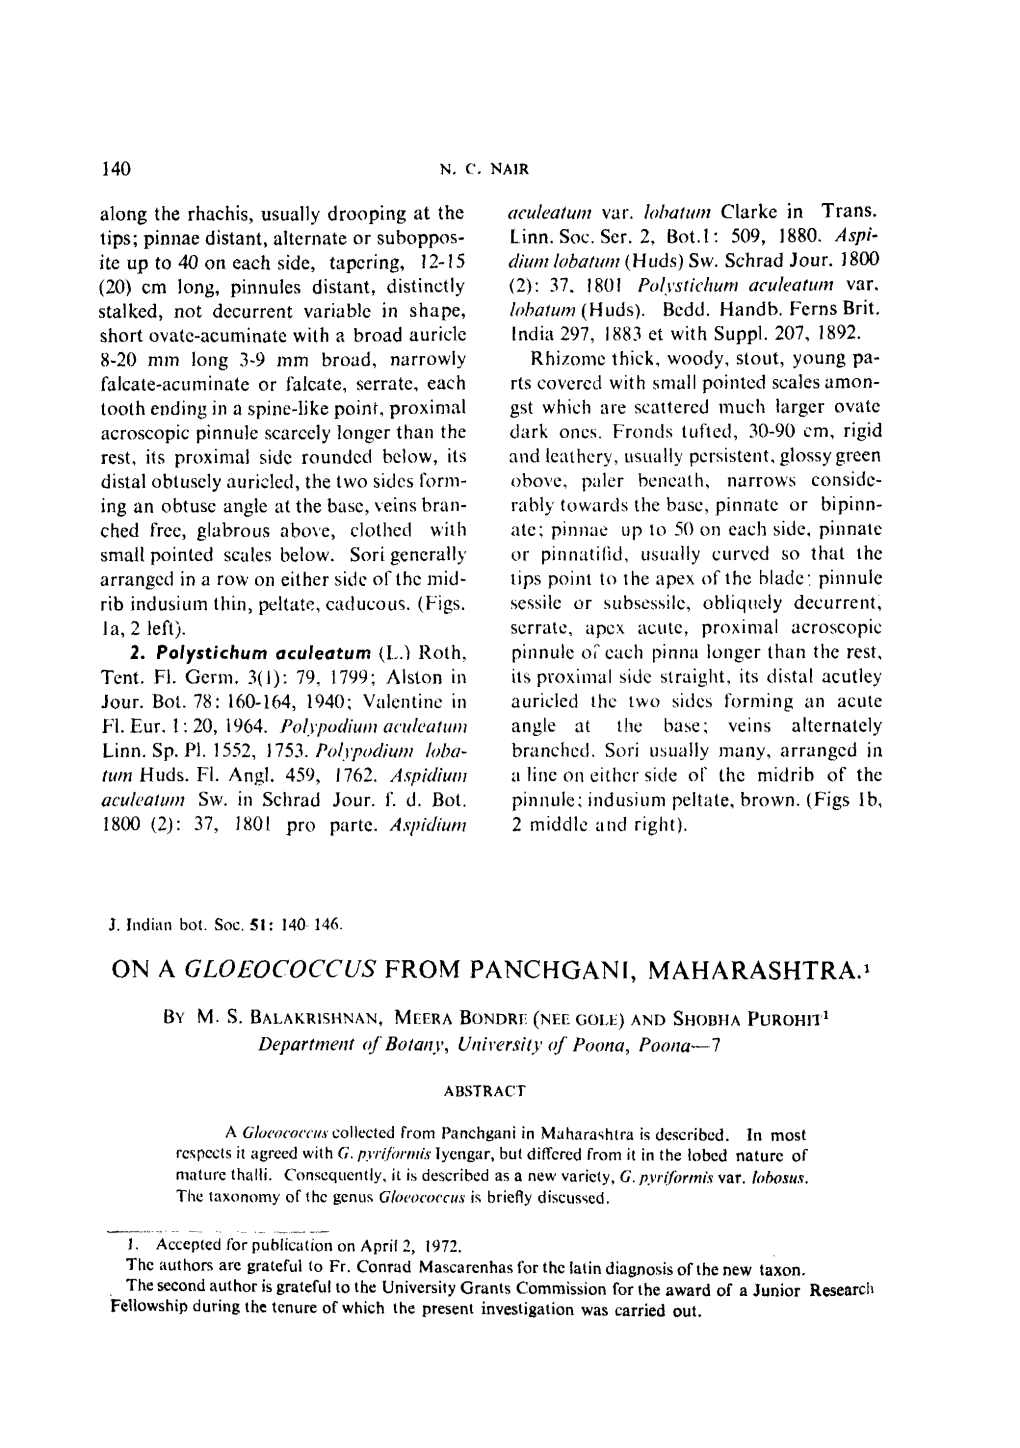 On a Gloeococcus from Panckgani, Maharashtra.'